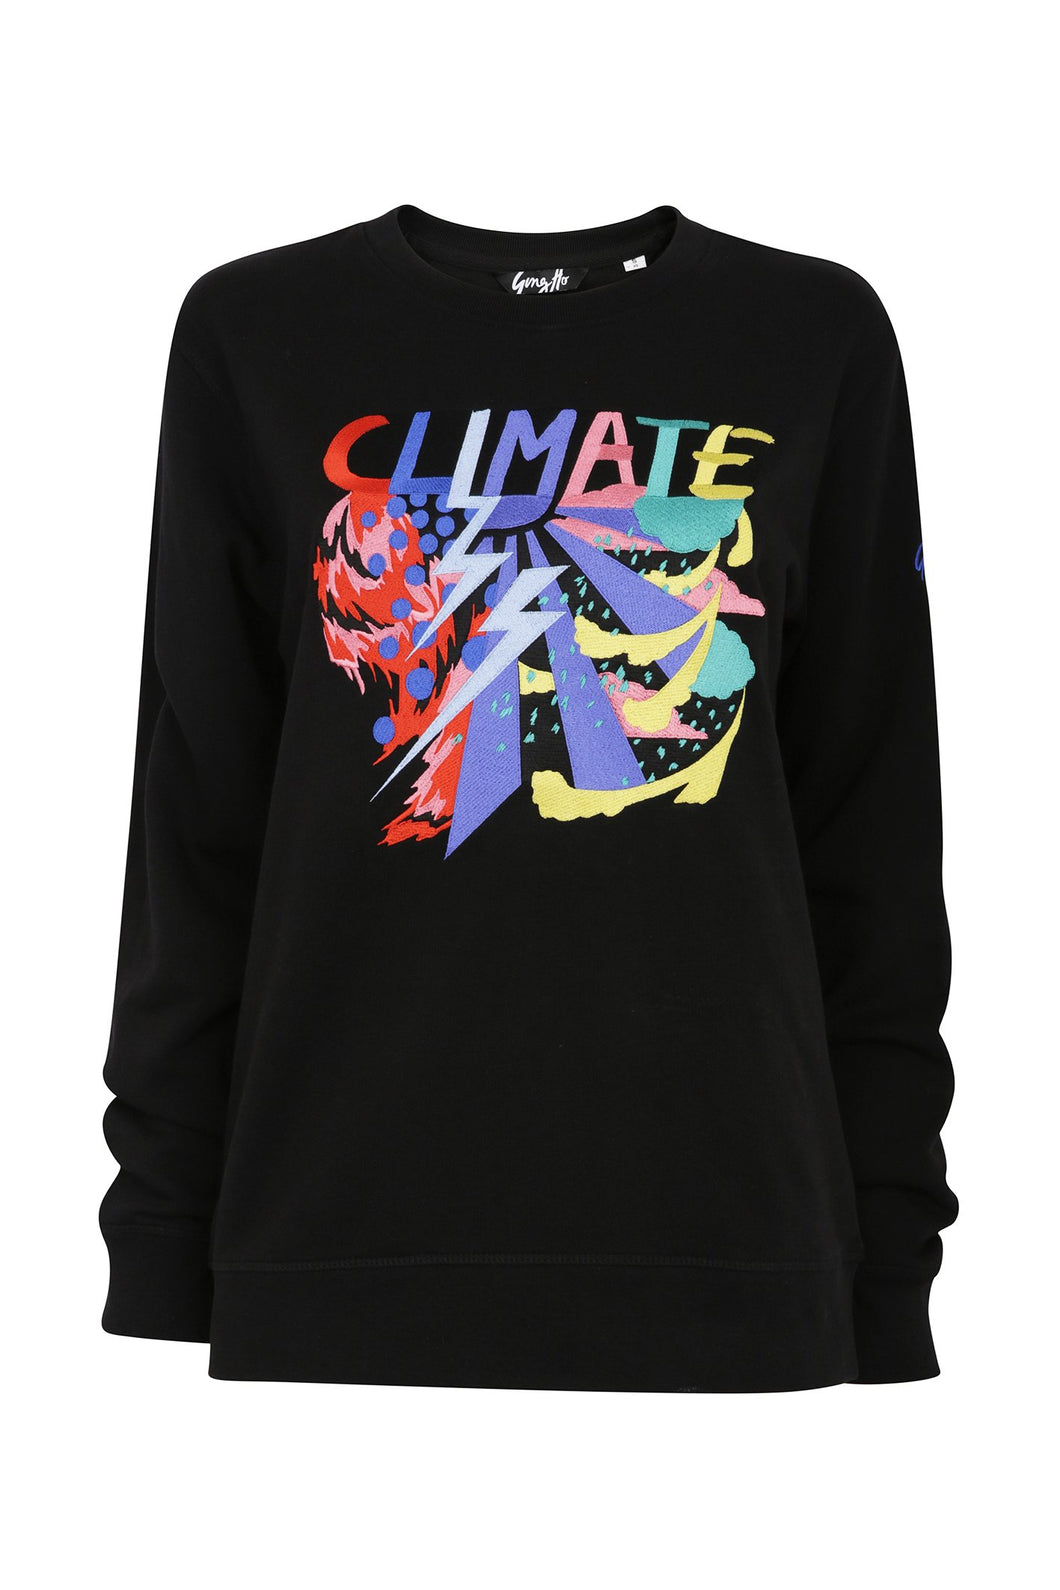 Climate Sweatshirt by Gungho London - Bare Fashion